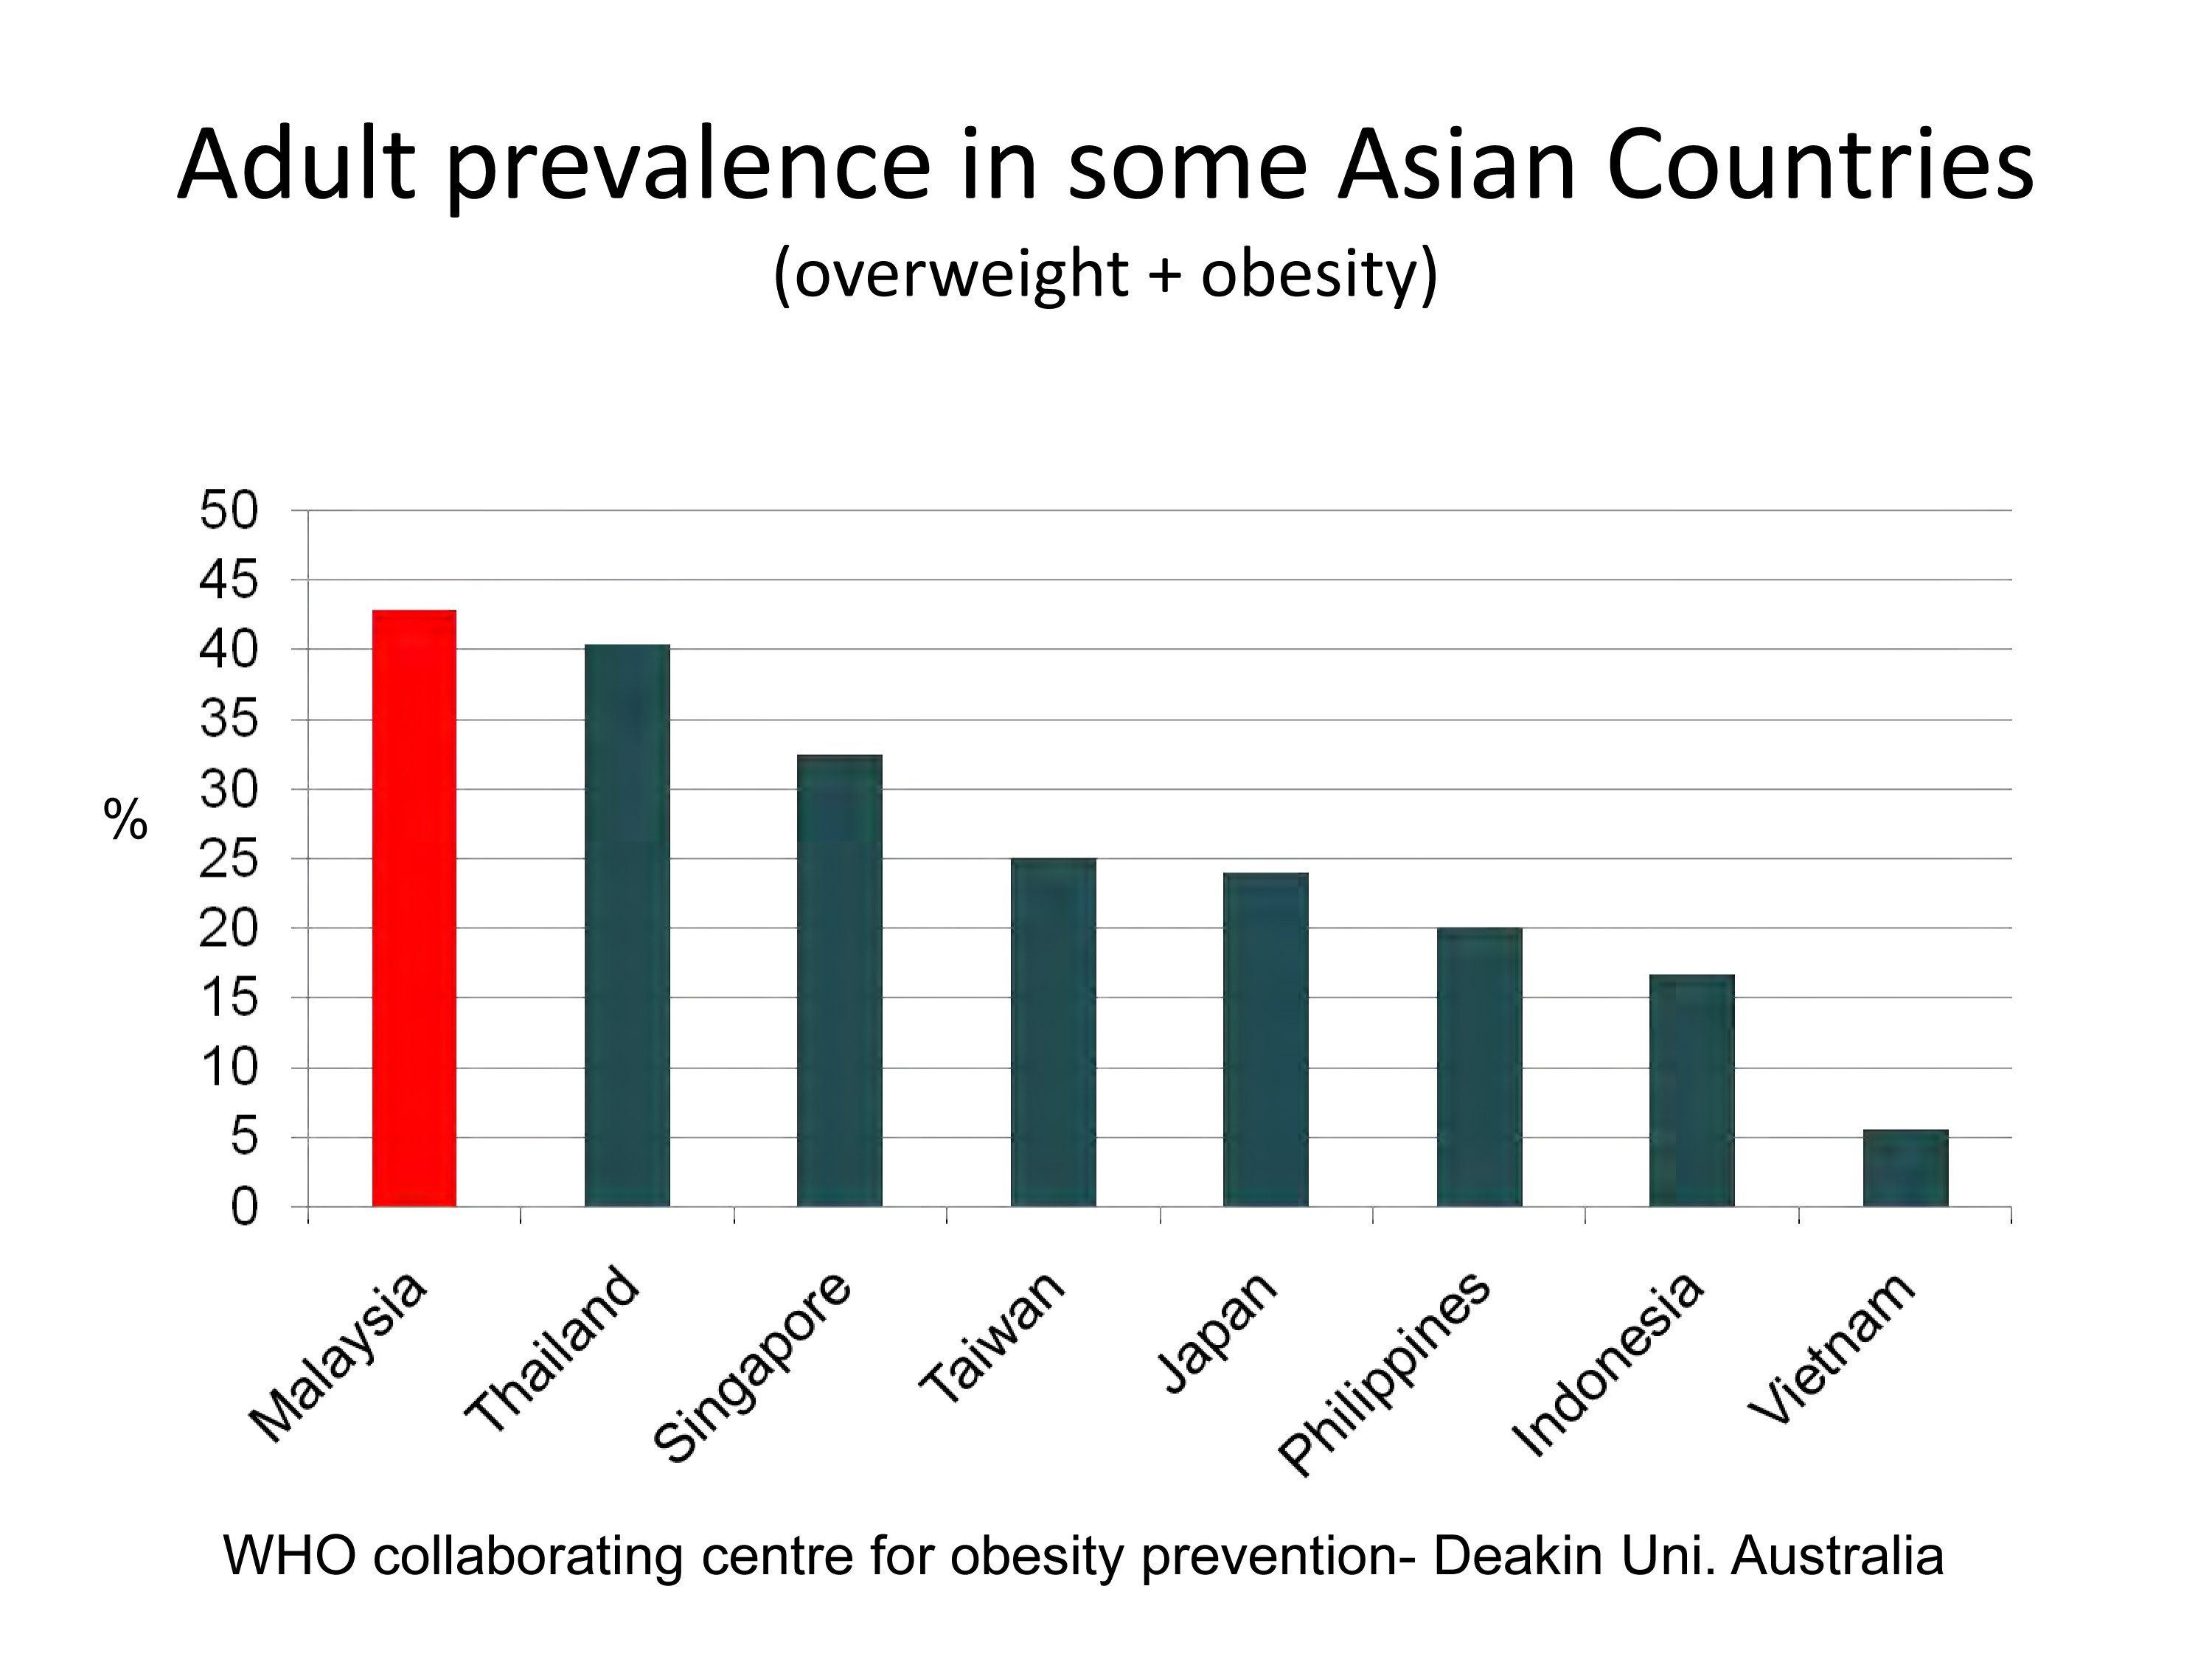 Venus reccomend Asian obesity rates